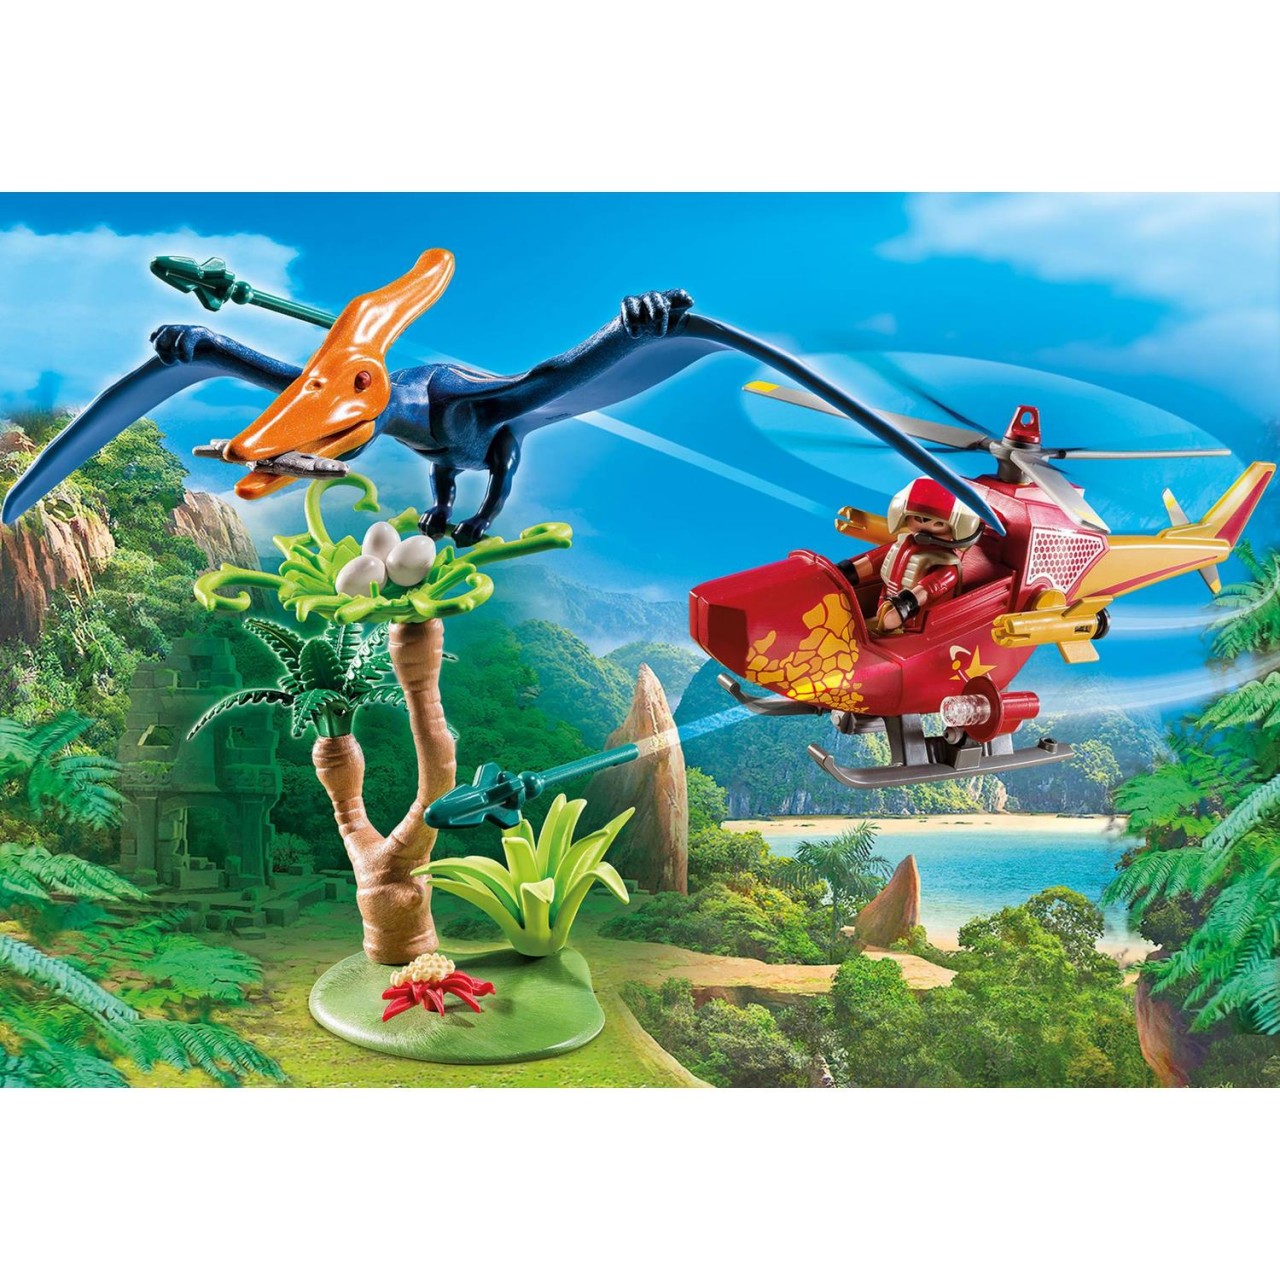 Playmobil 9430 Helikopter mit Flugsaurier